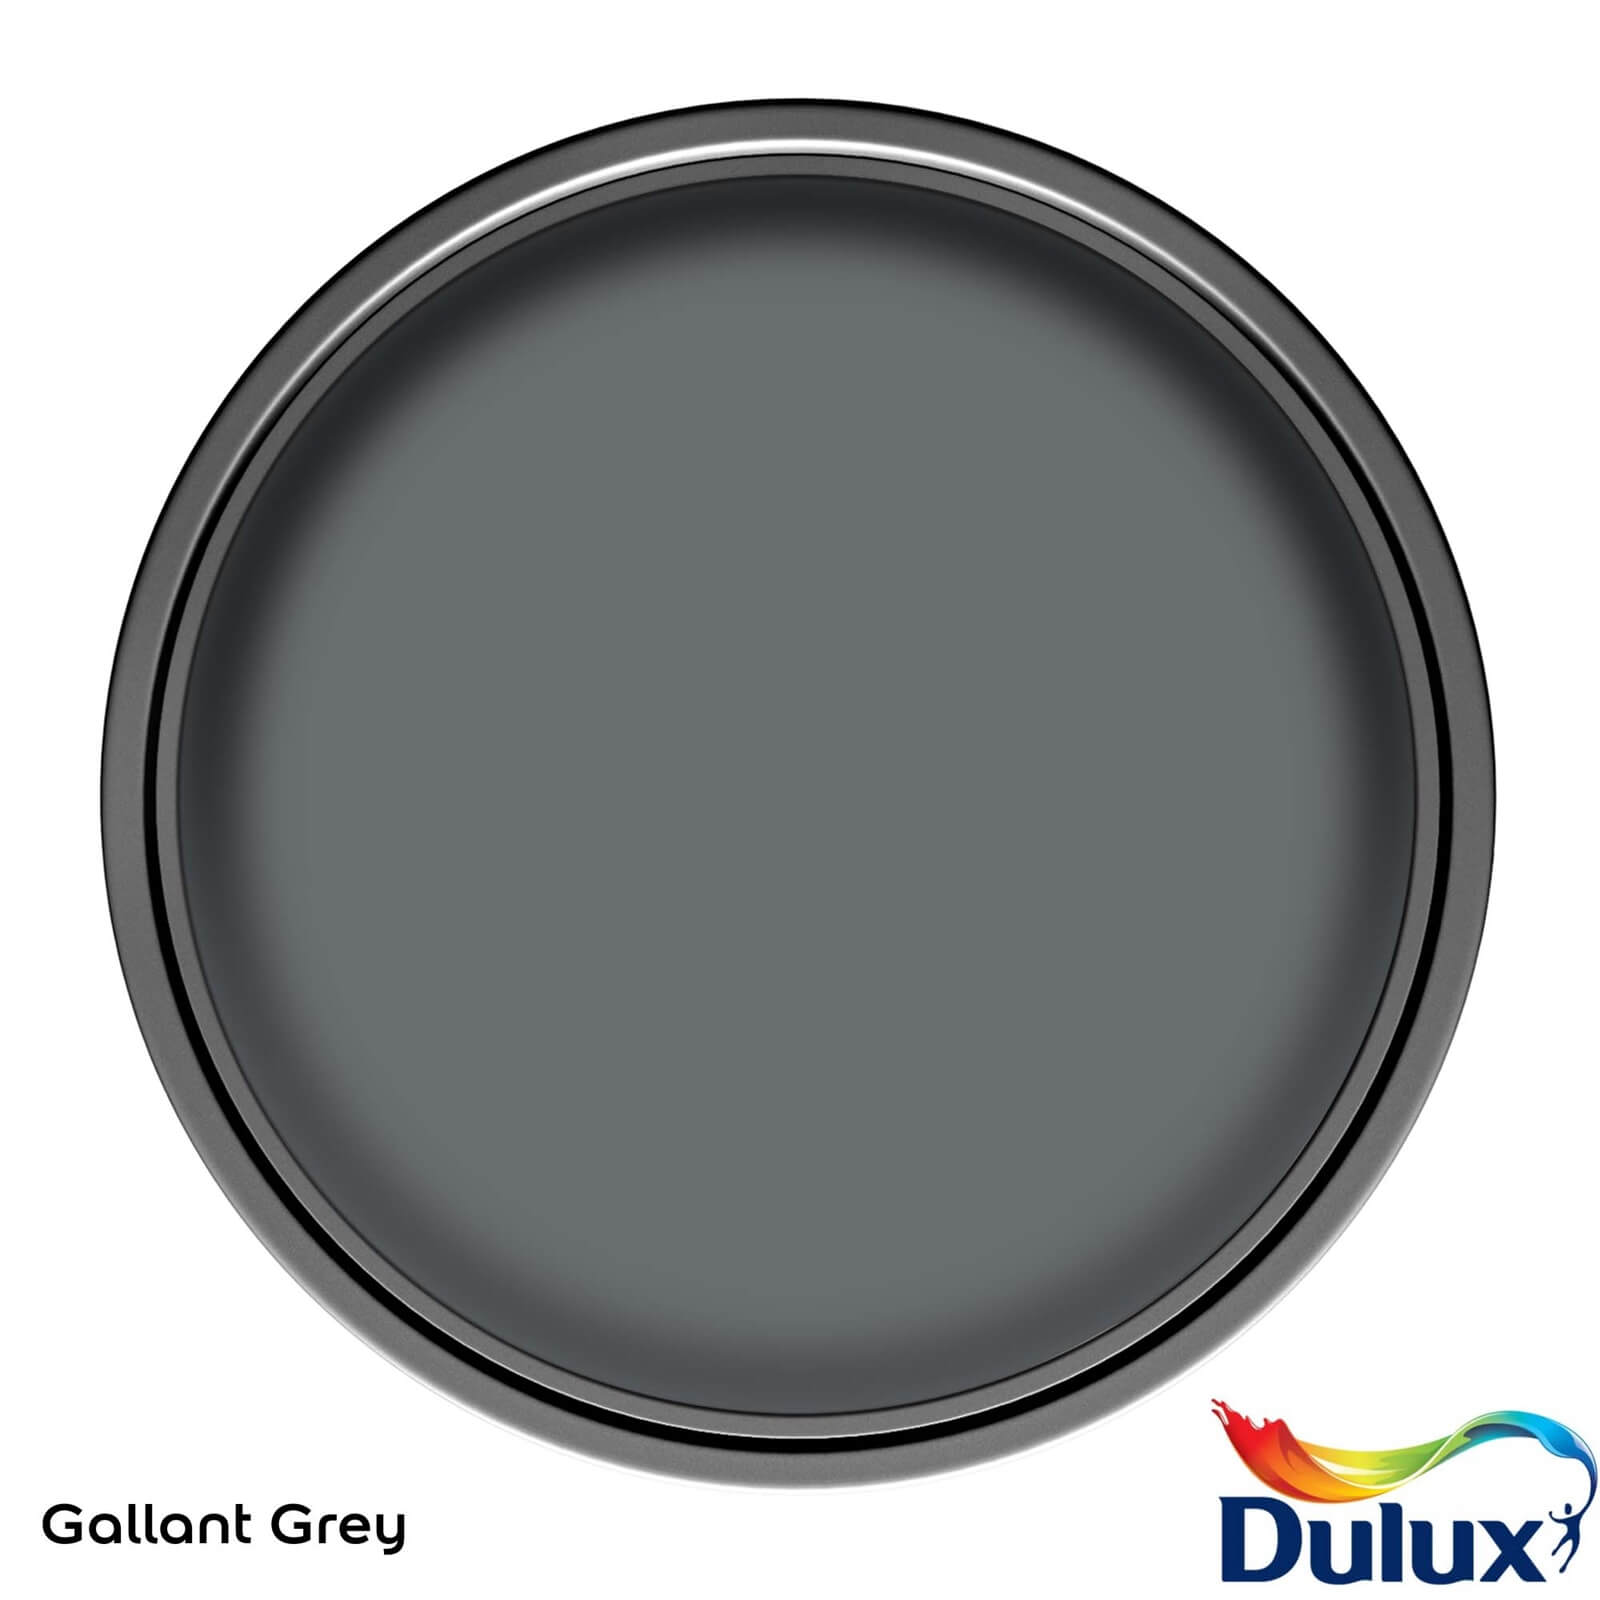 Dulux Weathershield Exterior Quick Dry Satin Paint Gallant Grey - 750ml